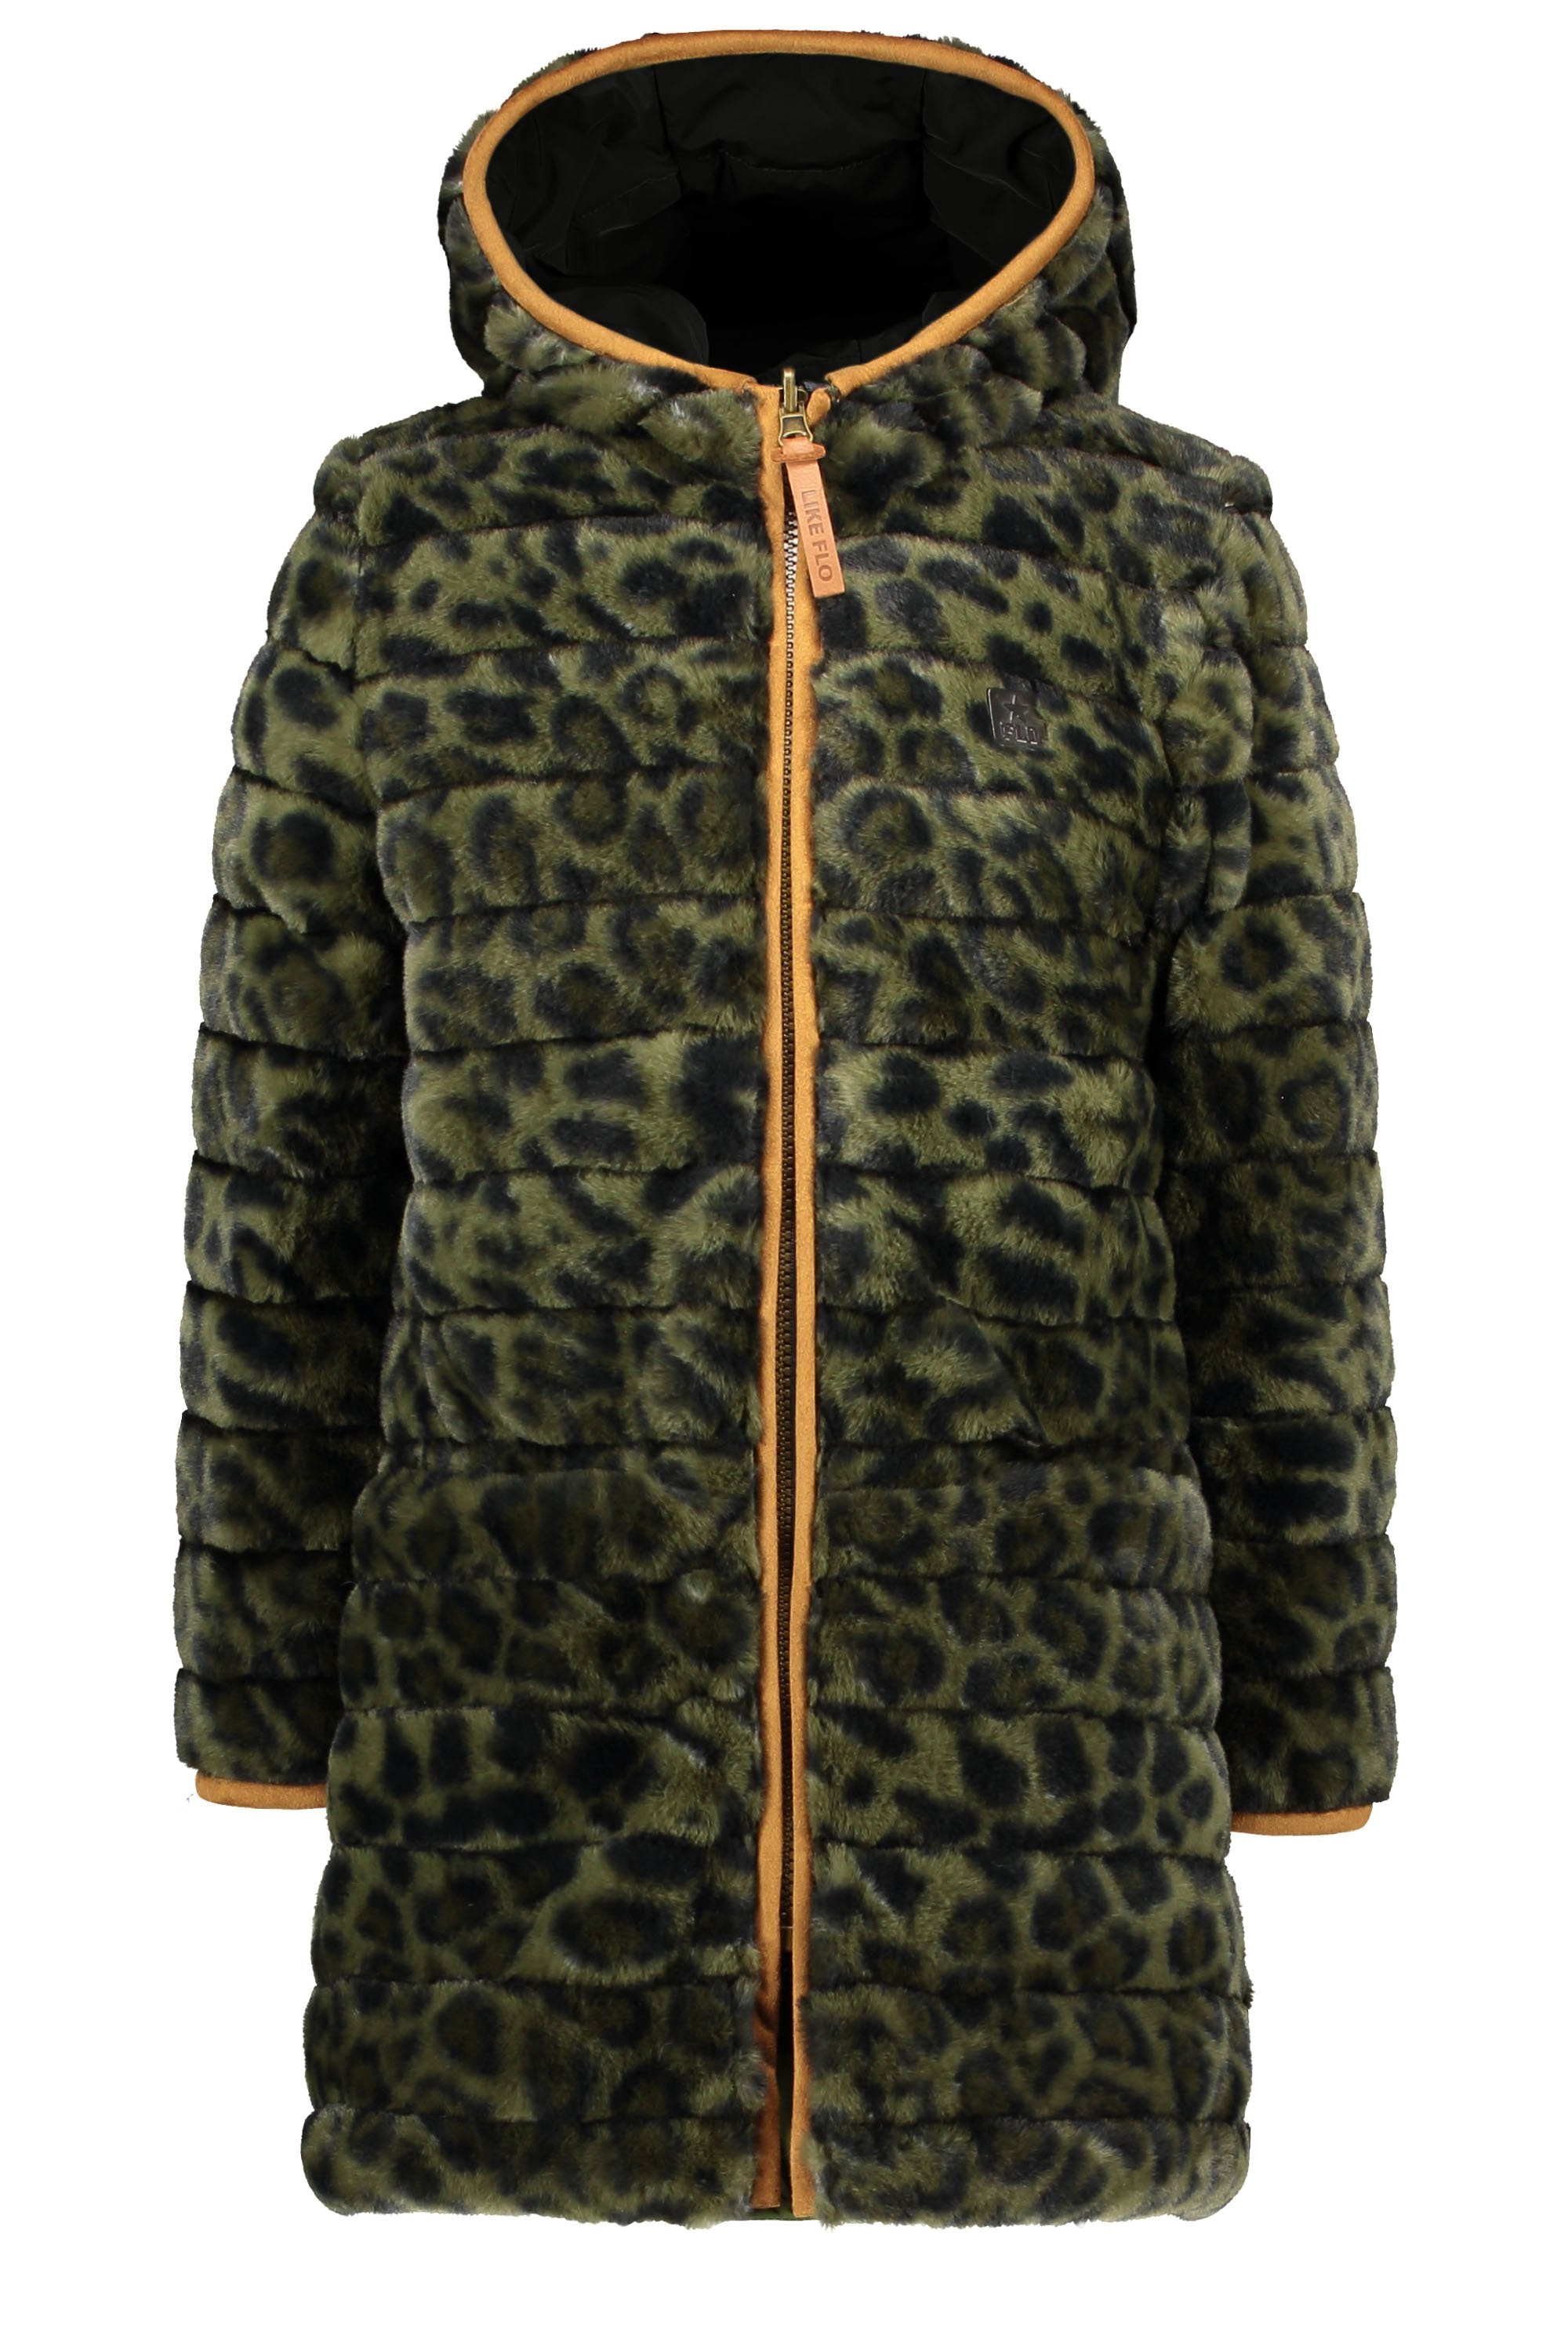 Meisjes Flo girls reversible hooded long jacket van Like Flo in de kleur Army in maat 152.